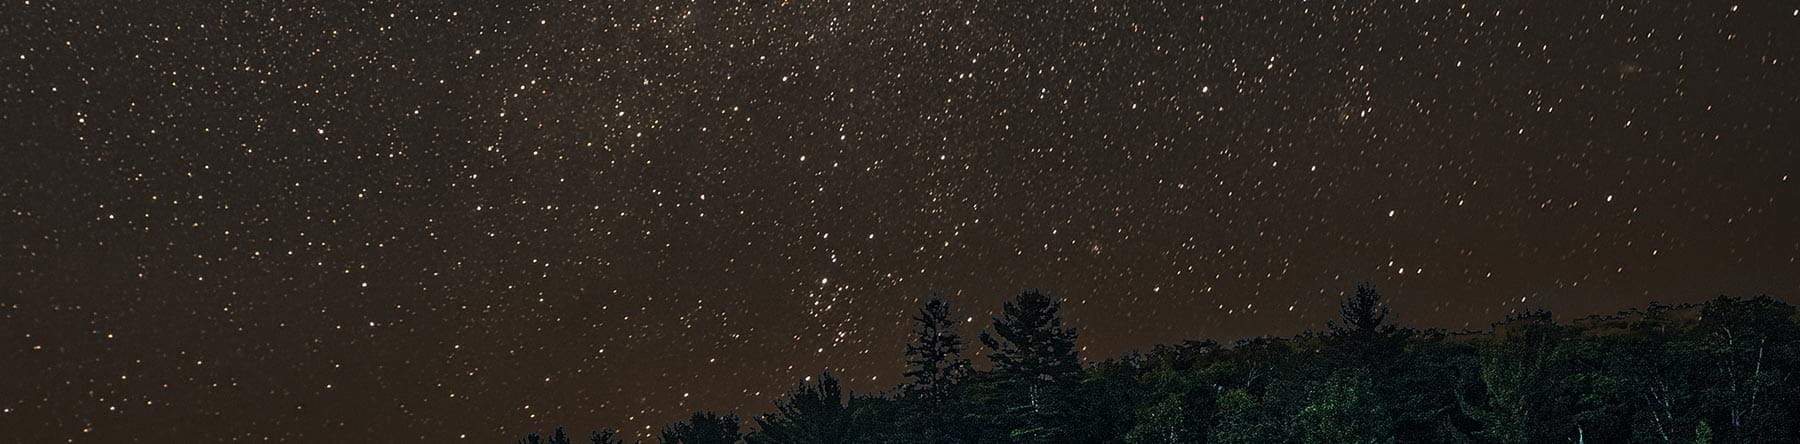 Homeschool astronomy night sky banner